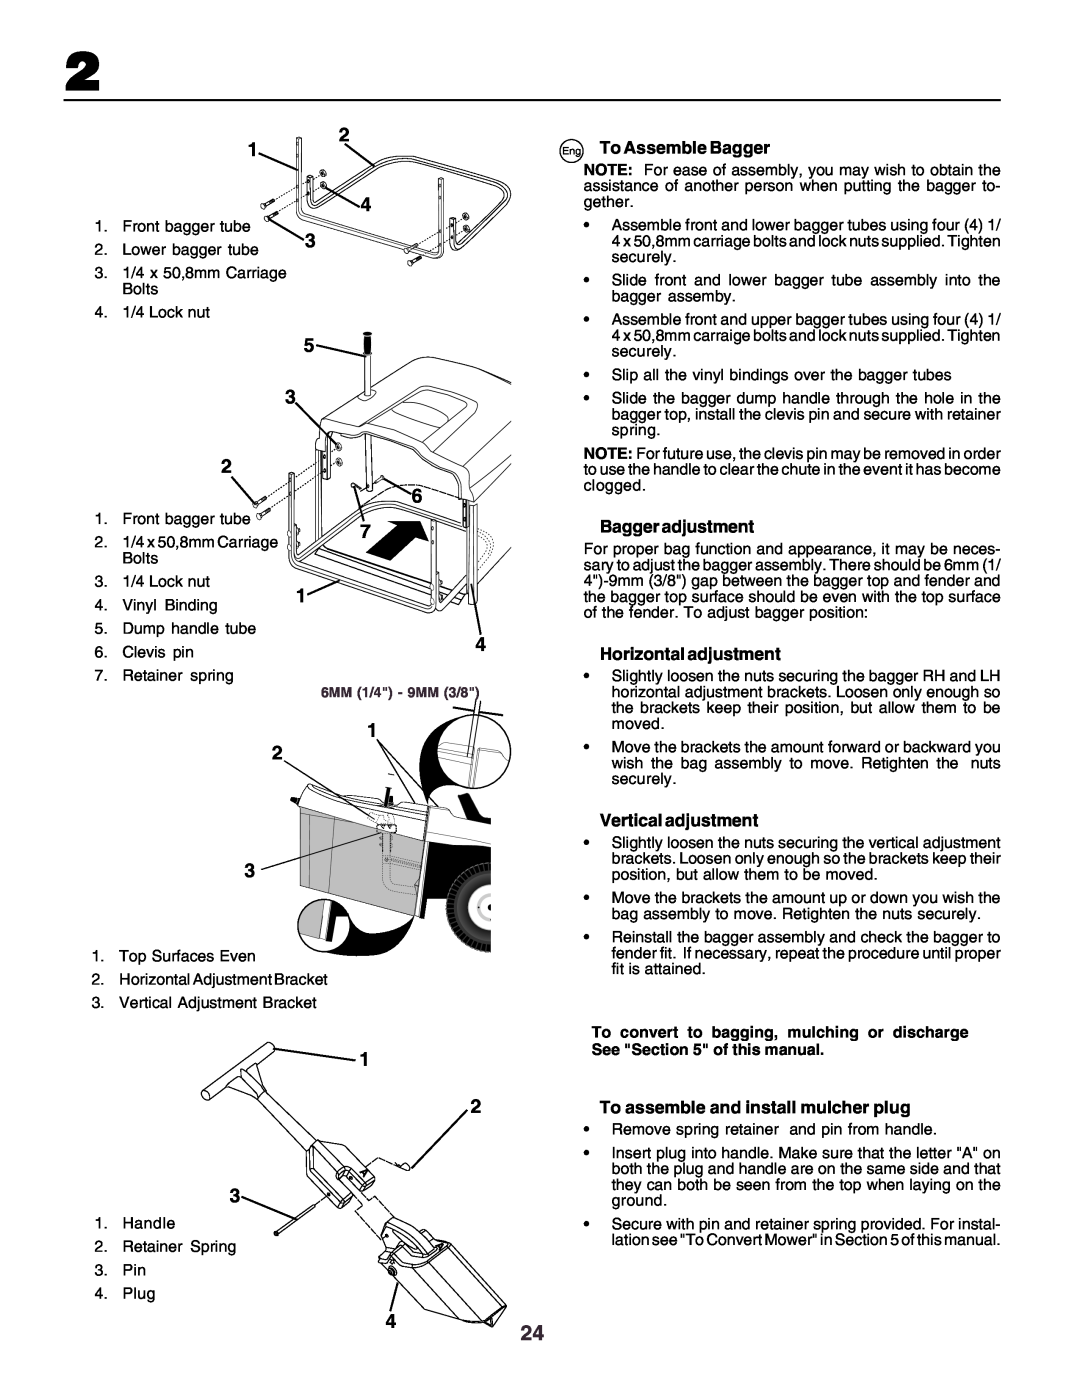 Husqvarna CT130 instruction manual Eng To Assemble Bagger, Bagger adjustment, Horizontal adjustment, Vertical adjustment 